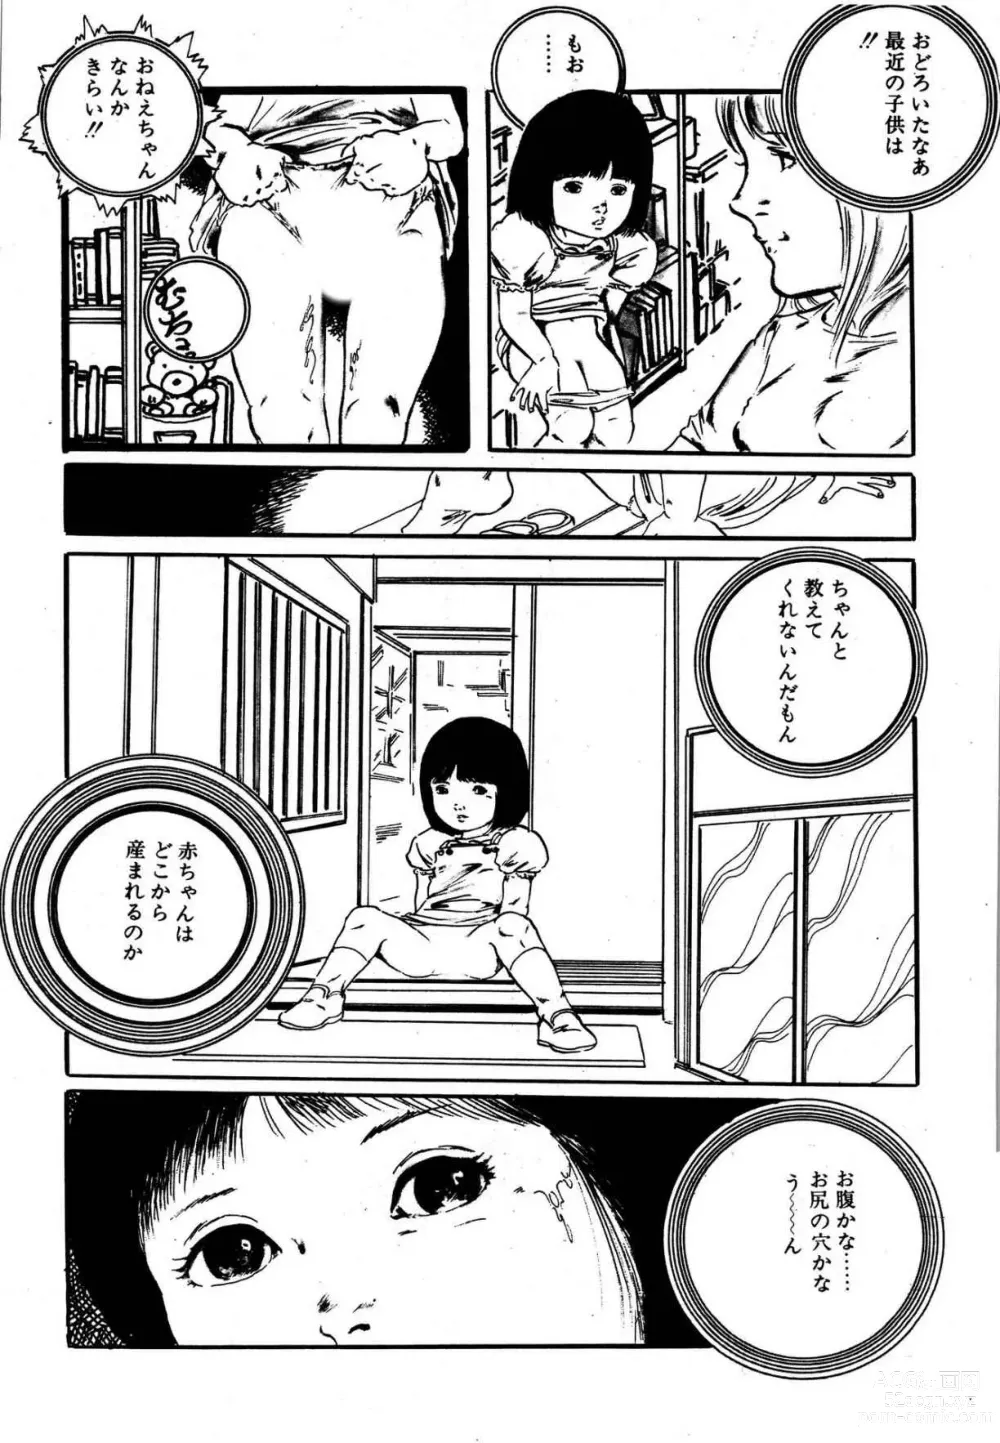 Page 183 of manga Dreaming fairy